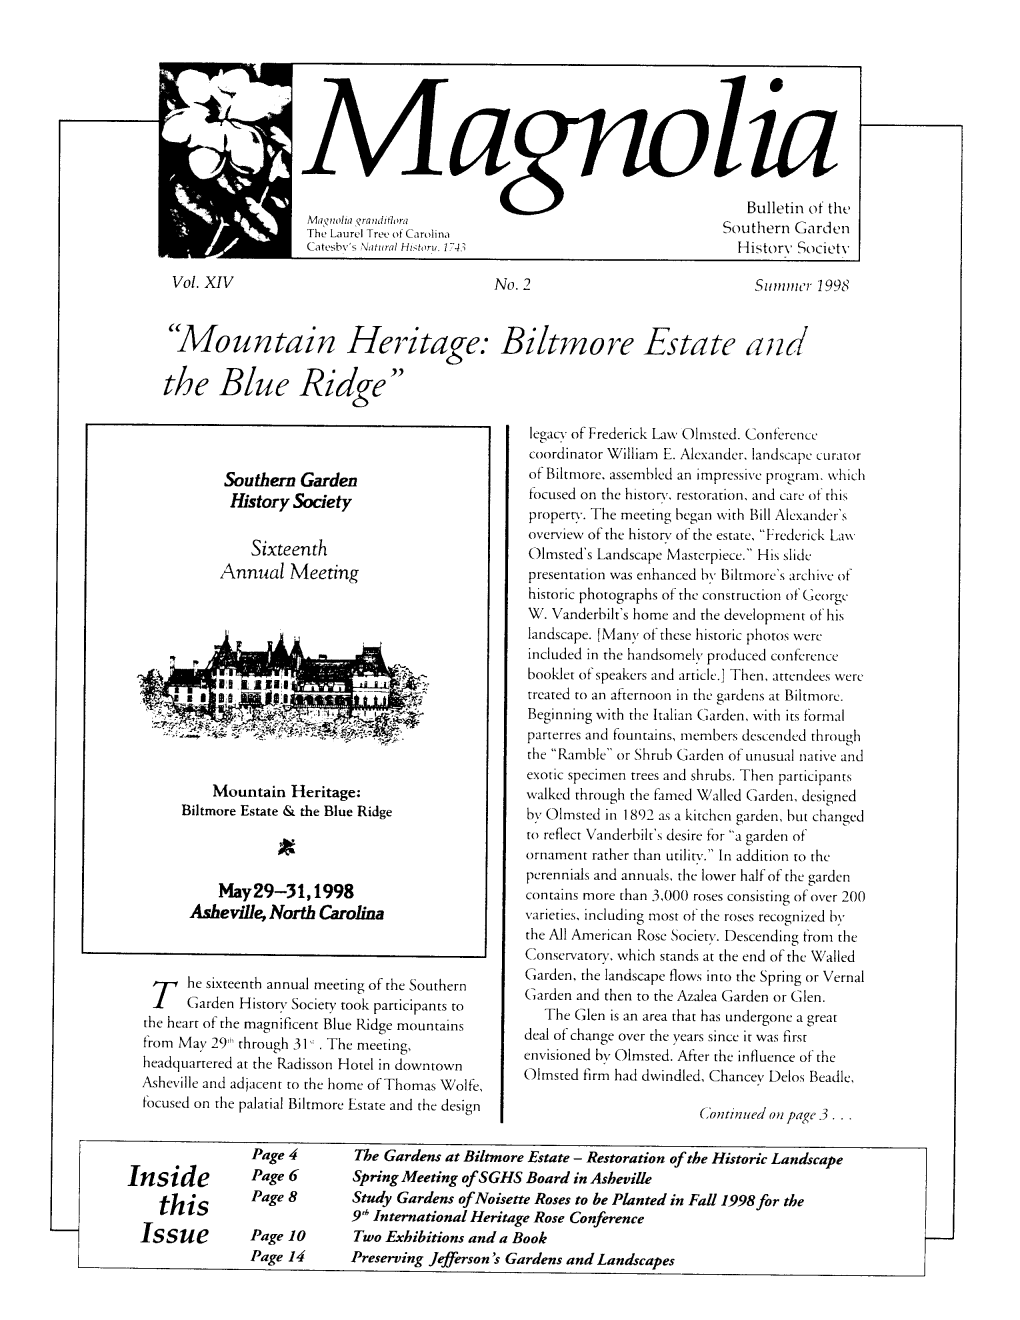 "Mountain Heritage: Biltmore Estate and the Blue Ridge"